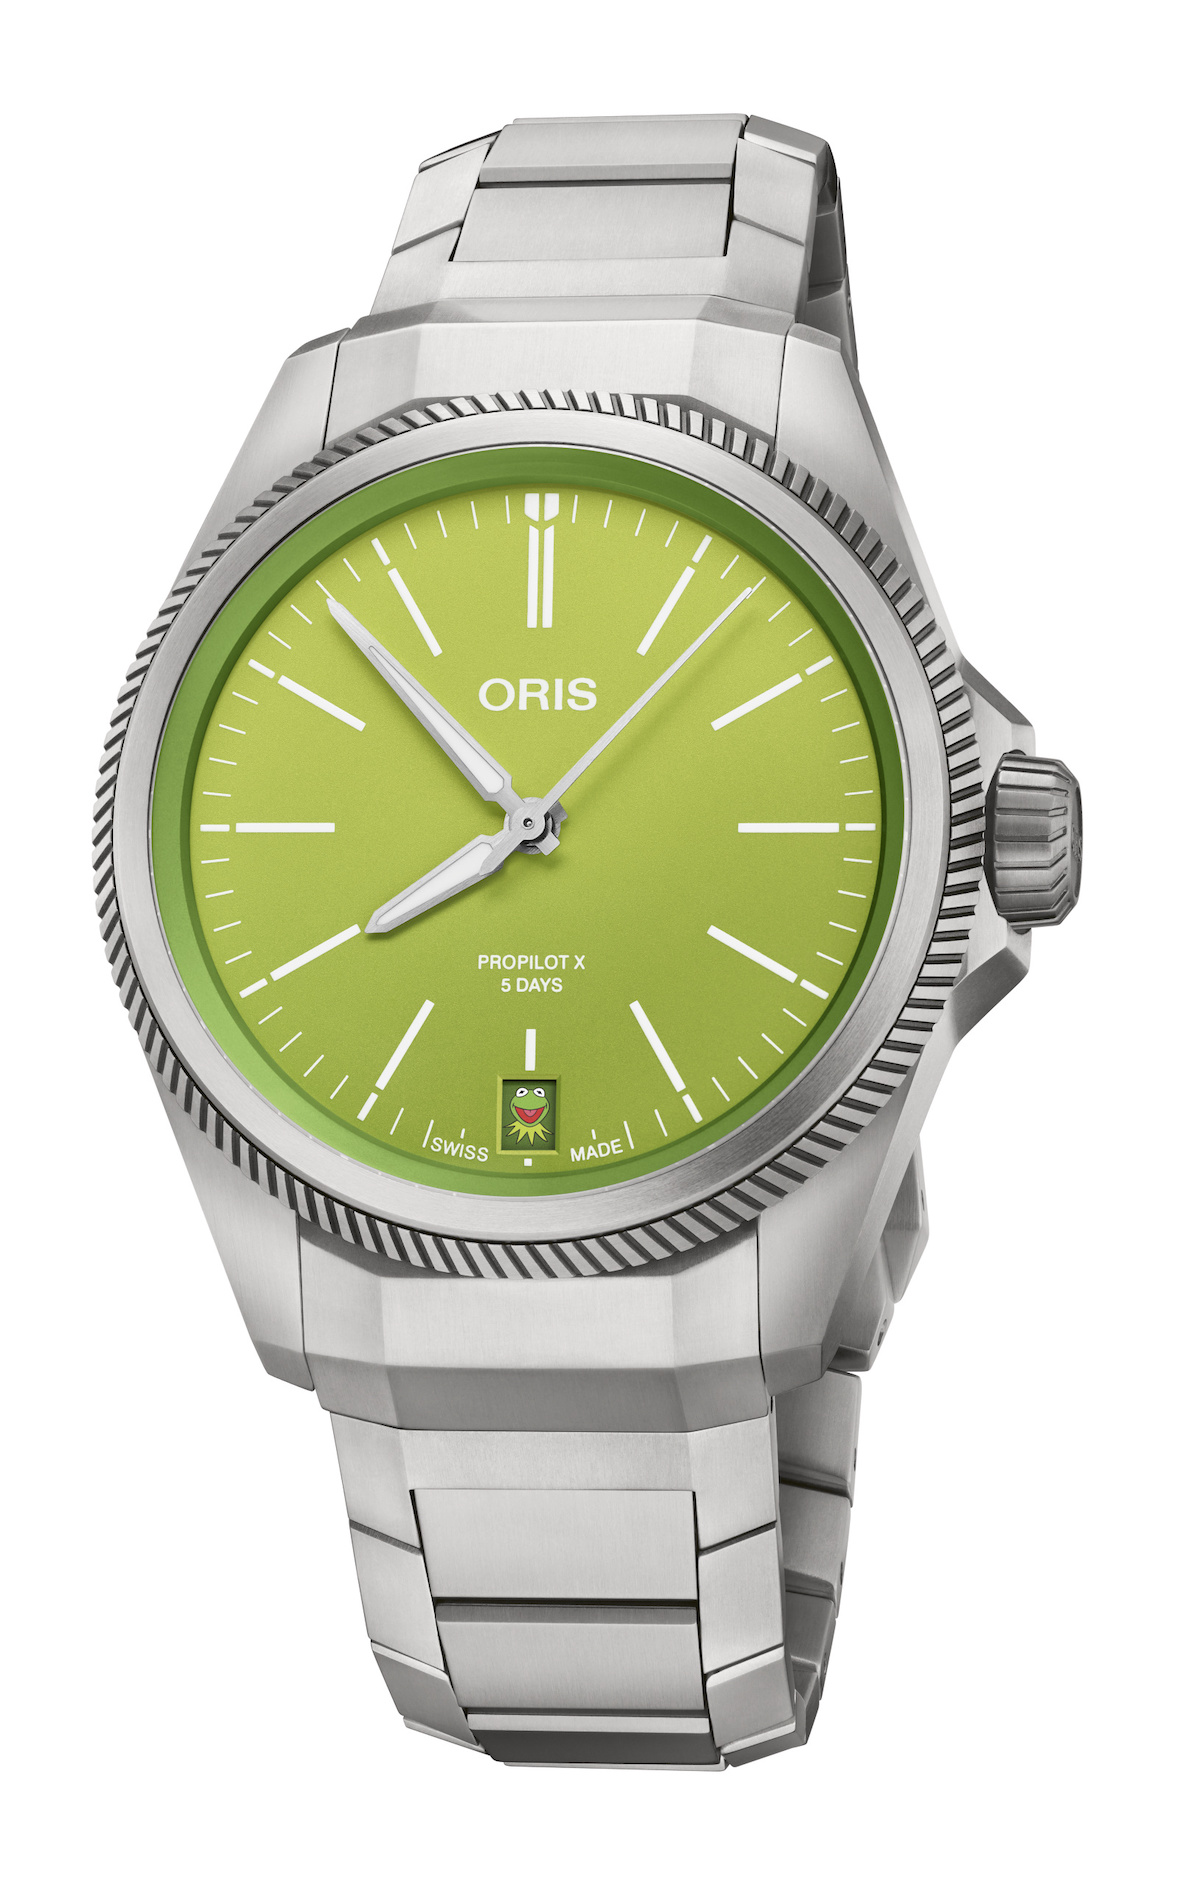 Meet the Oris ProPilot X Kermit Edition watch at Watches & Wonders Geneva 2023.